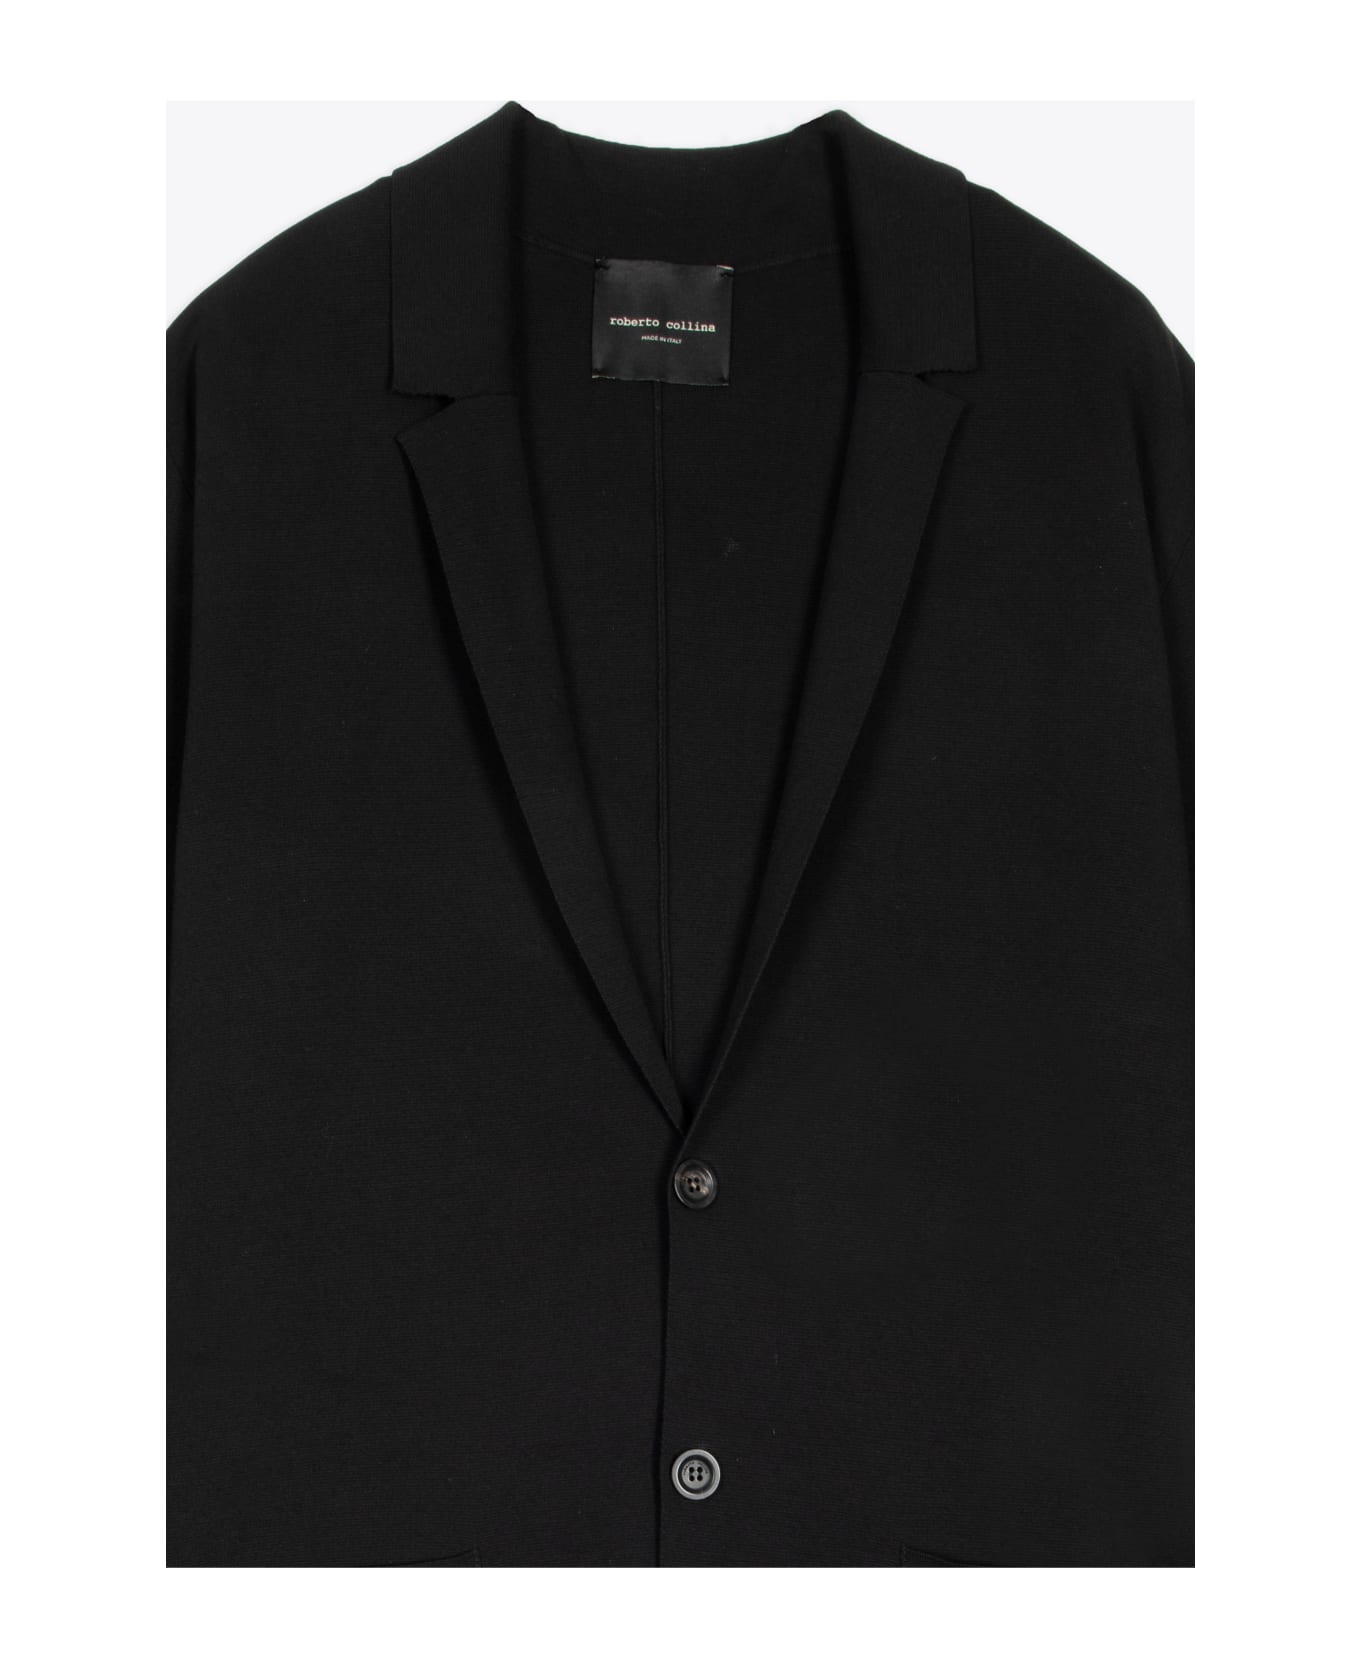 Roberto Collina Giacca Revers Black cotton knit blazer with patch pockets - Nero